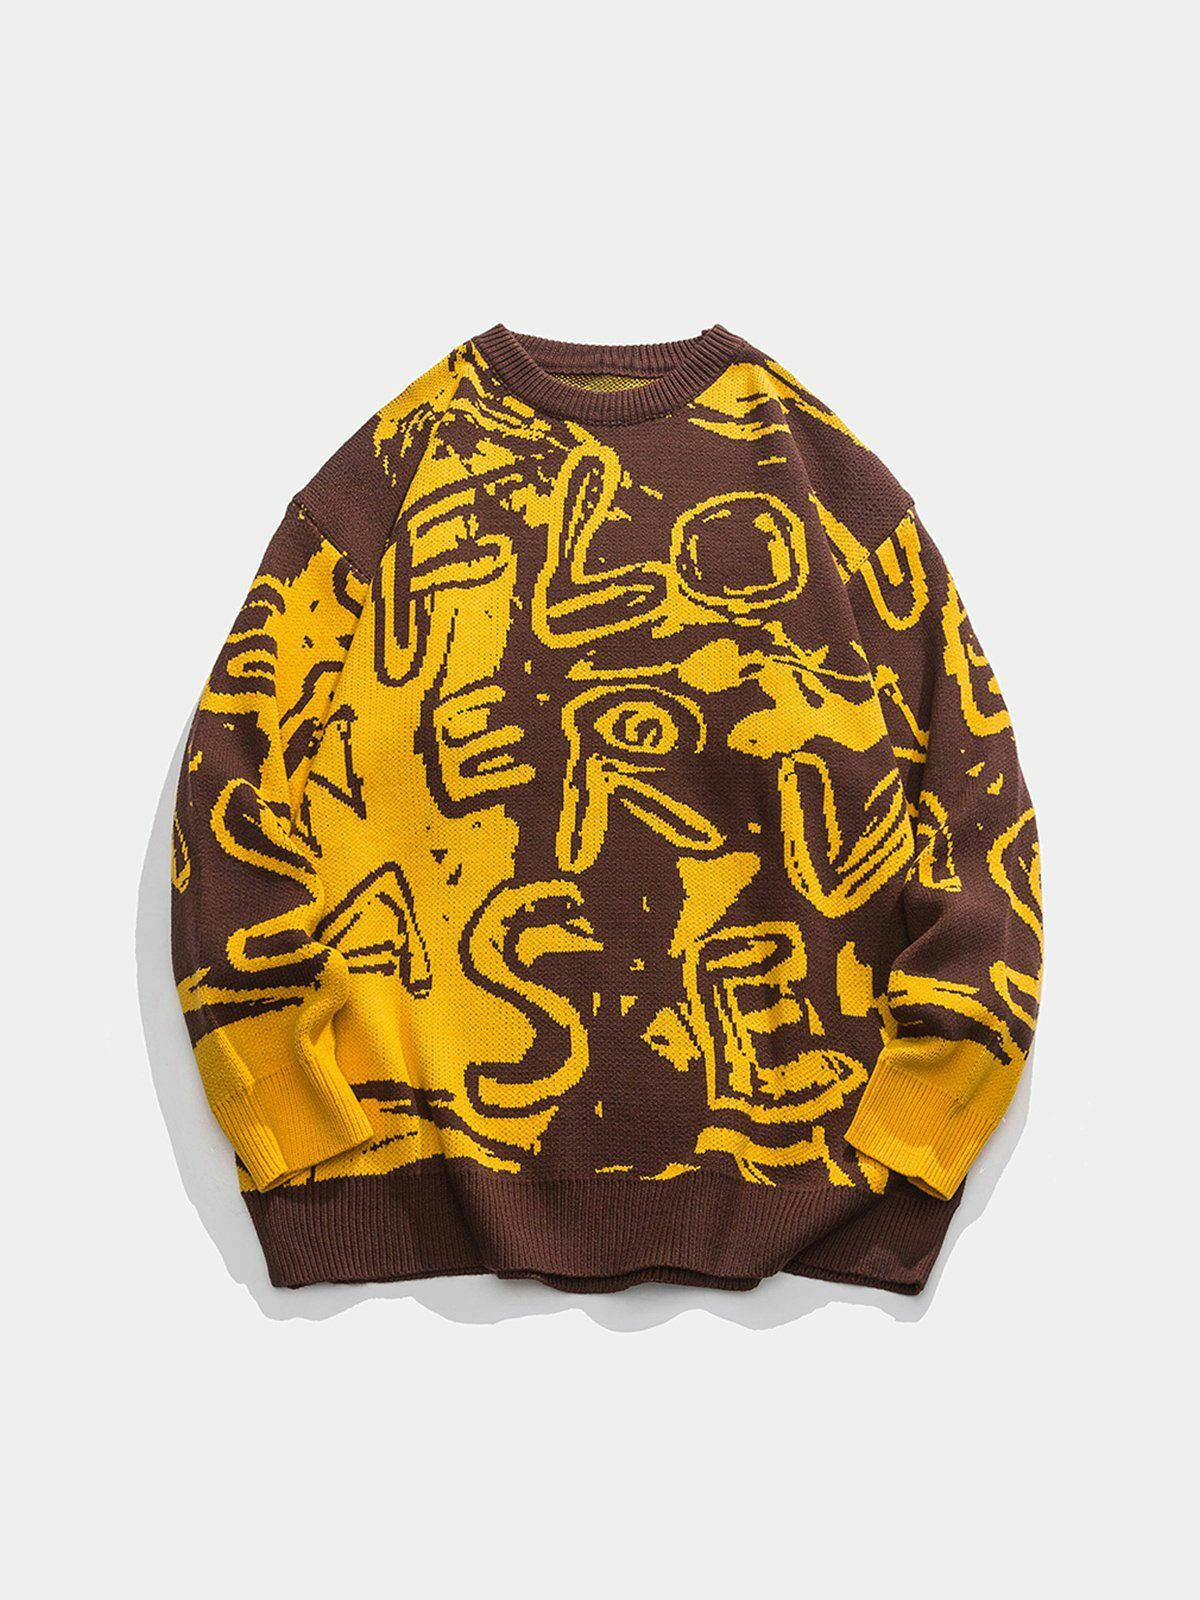 bold graffiti print sweater urban fashion statement 3404